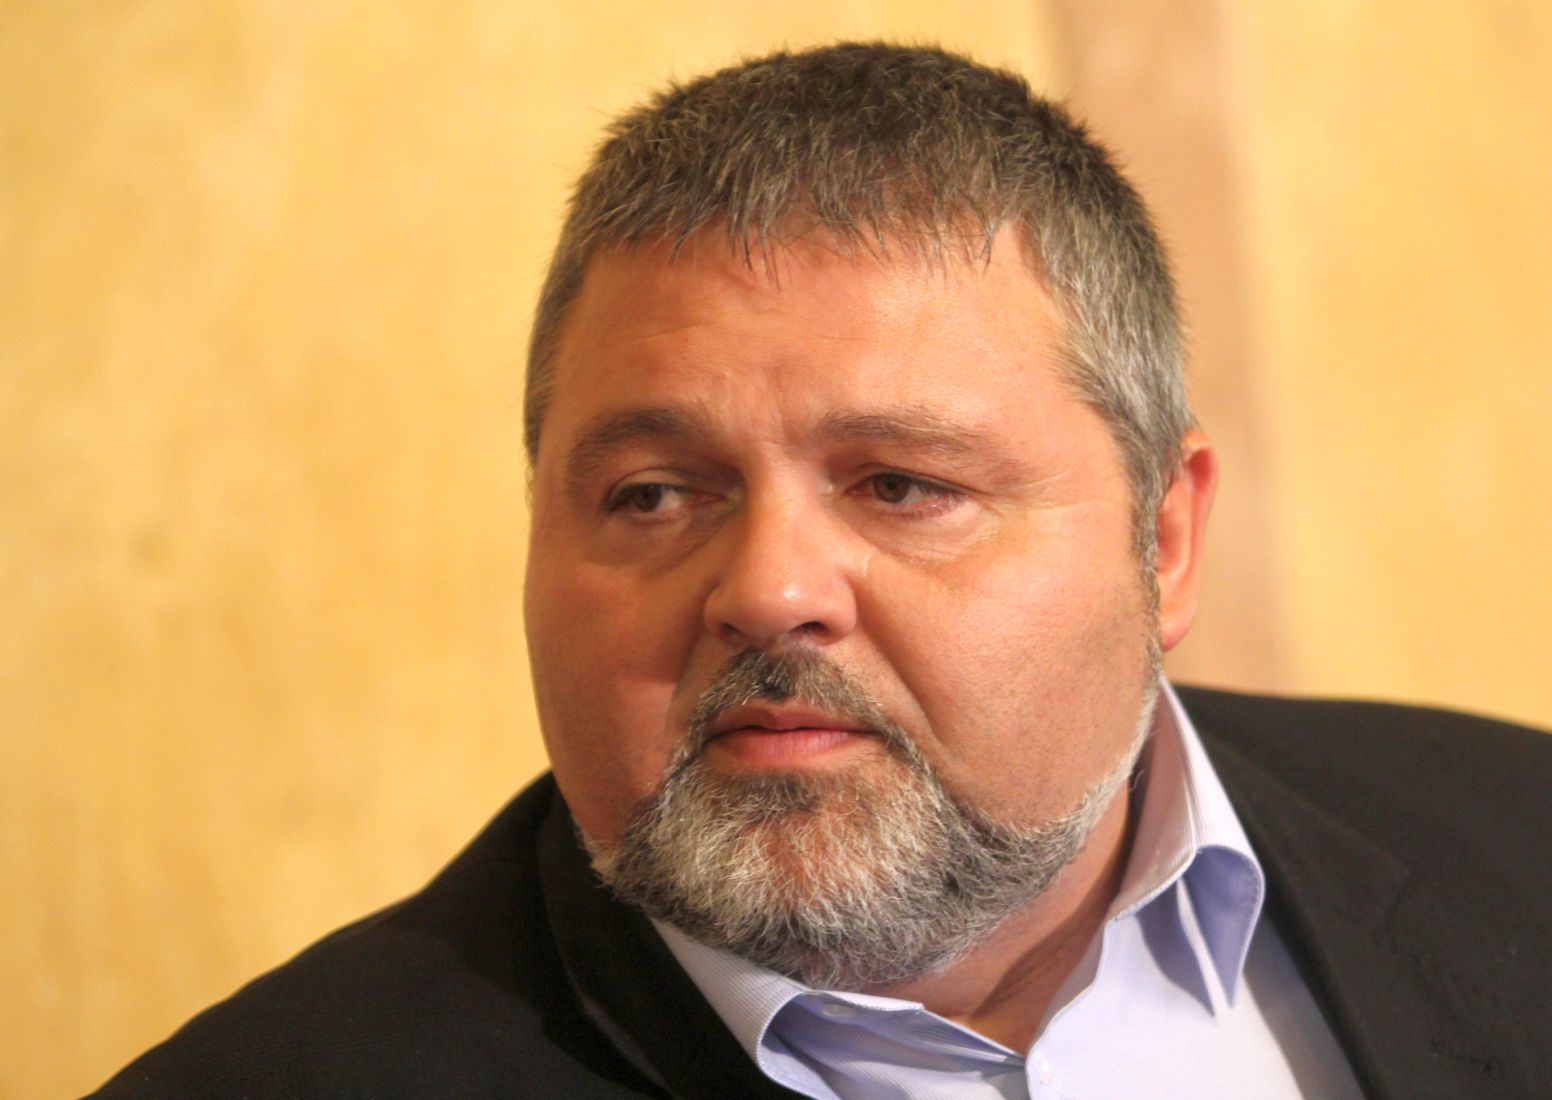 Собственици на заведения плащат по 500 лева срещу предупреждение за предстояща проверка, заяви Кирил Гумнеров